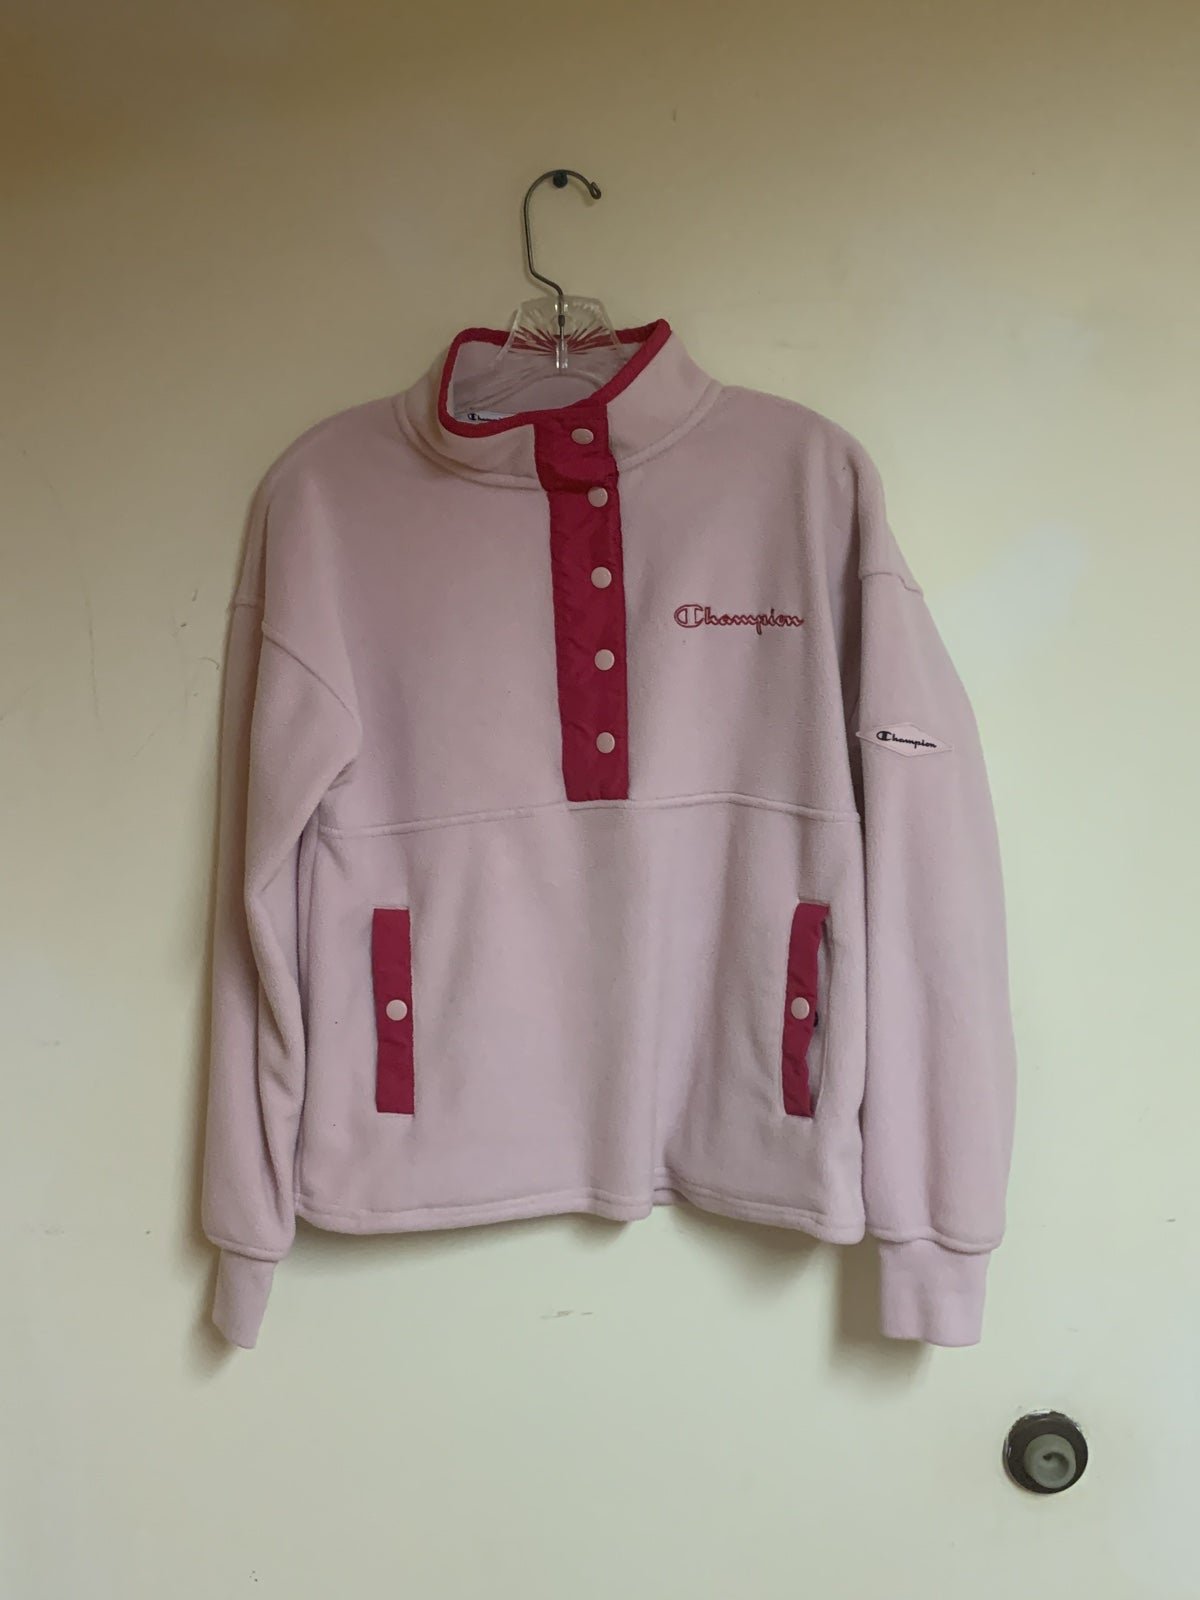 Popular Champion Sweater Ftkk8QTTO outlet online shop